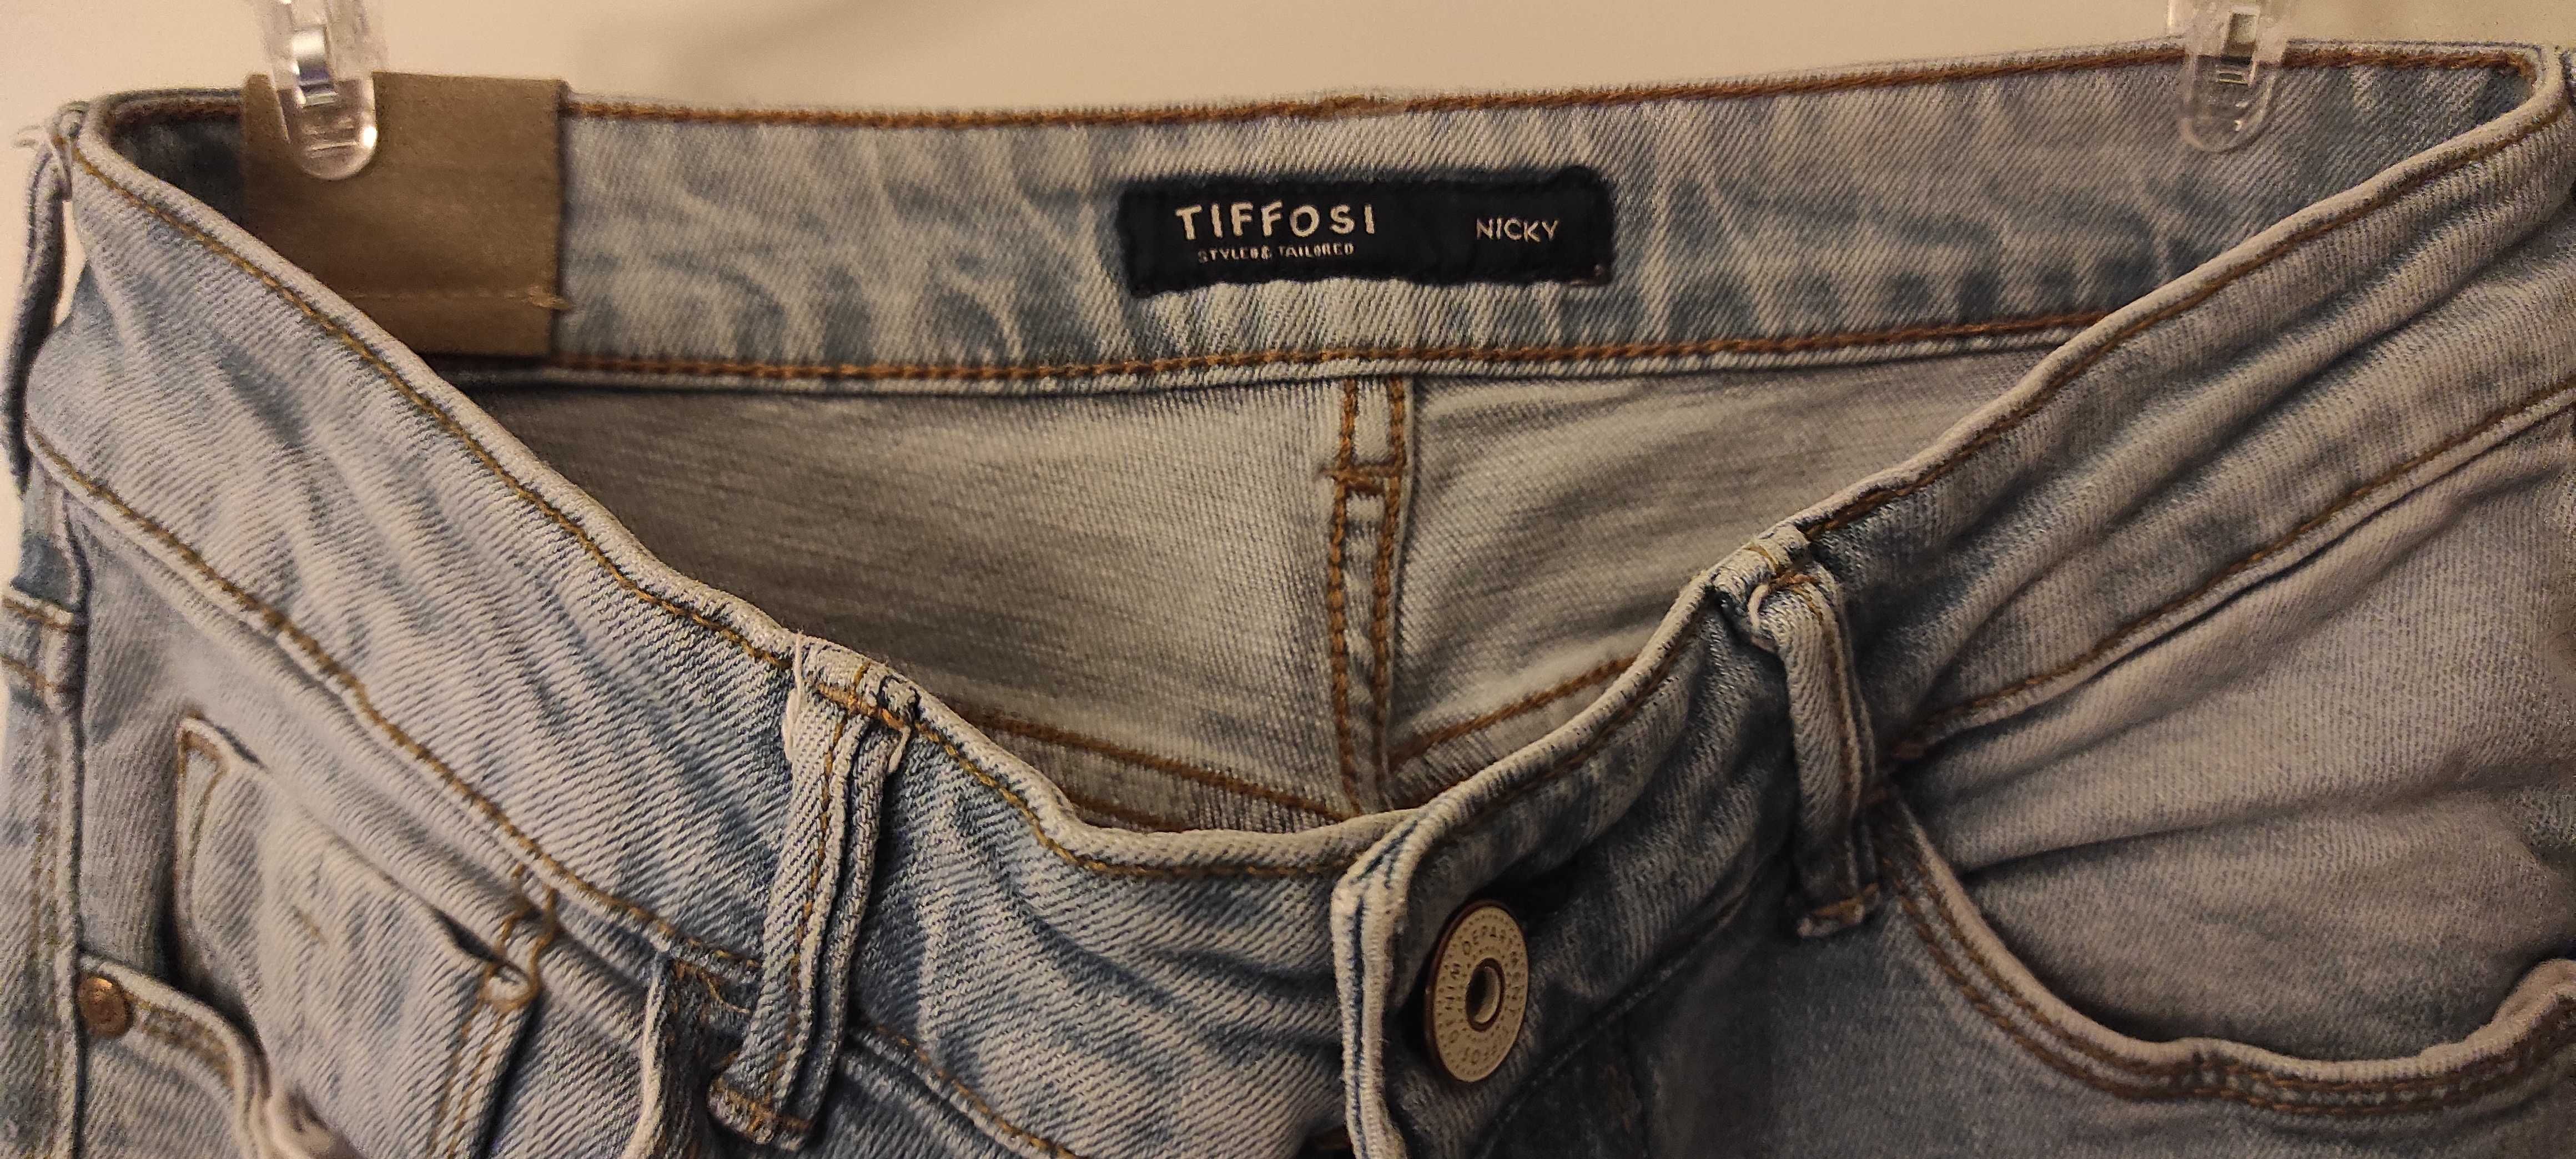 Jeans da Tiffosi para meninas